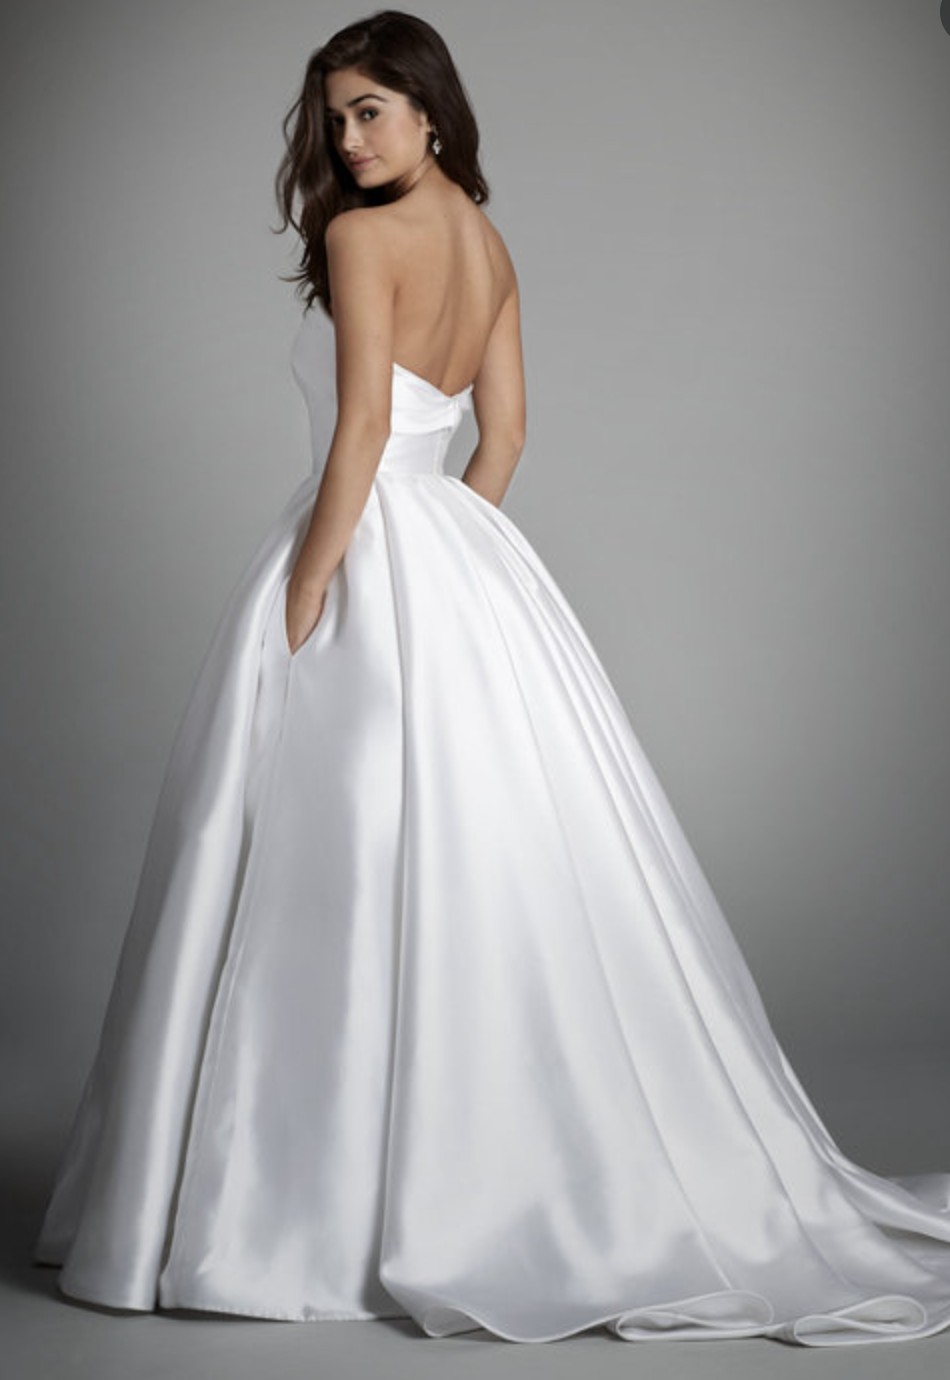 Alvina Valenta Wedding Dress Save 61% - Stillwhite